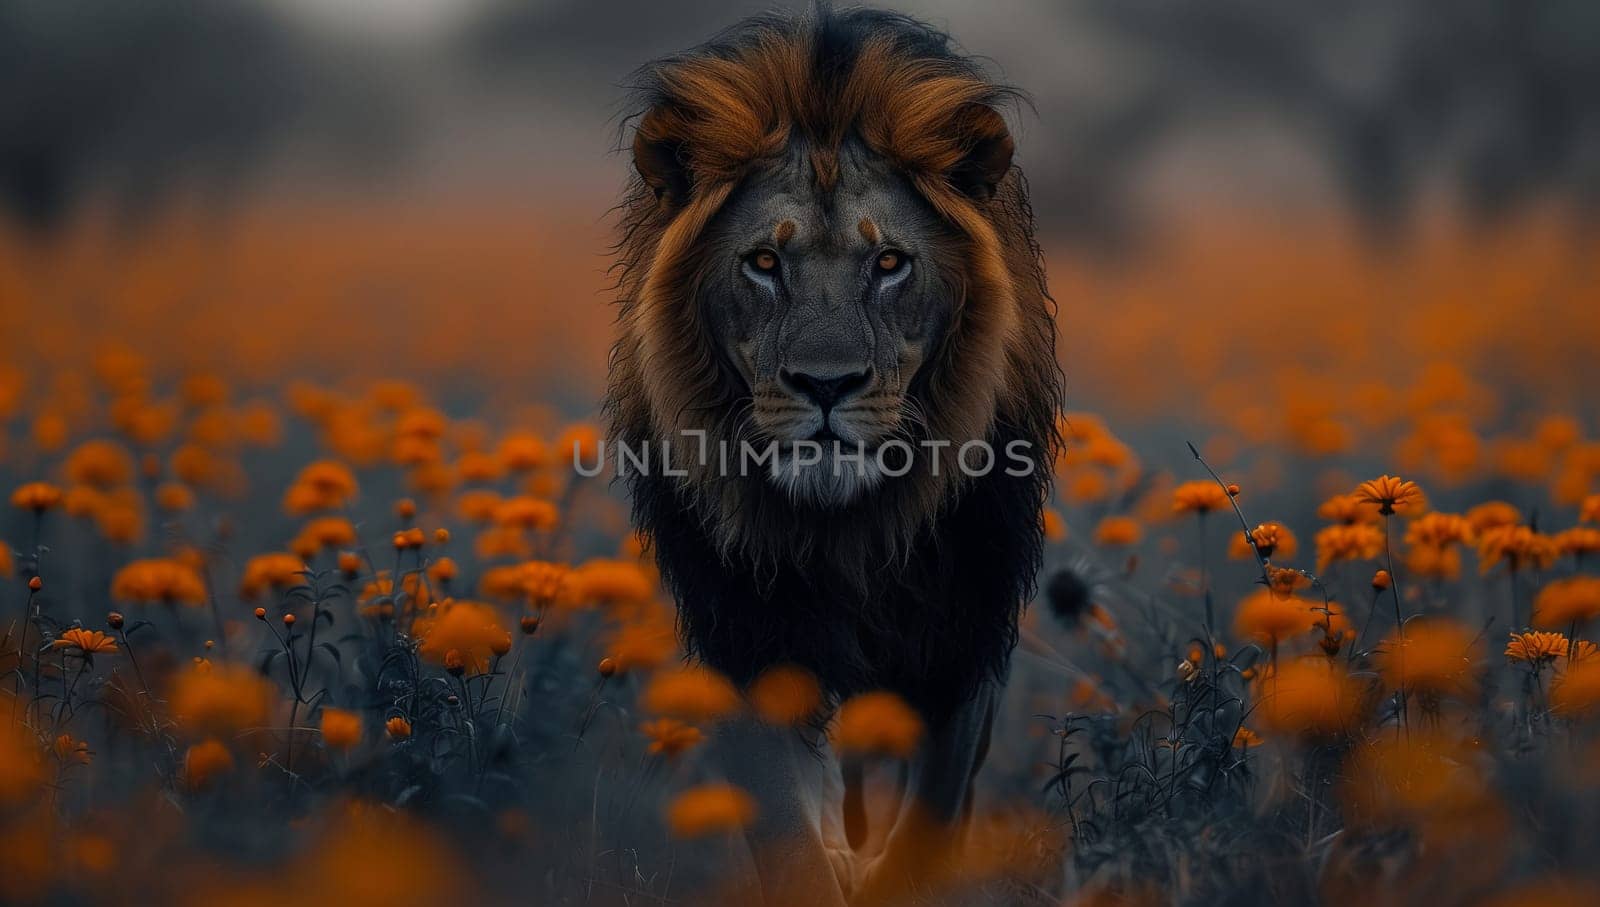 Masai lion strolling through grassy field of orange flowers by richwolf